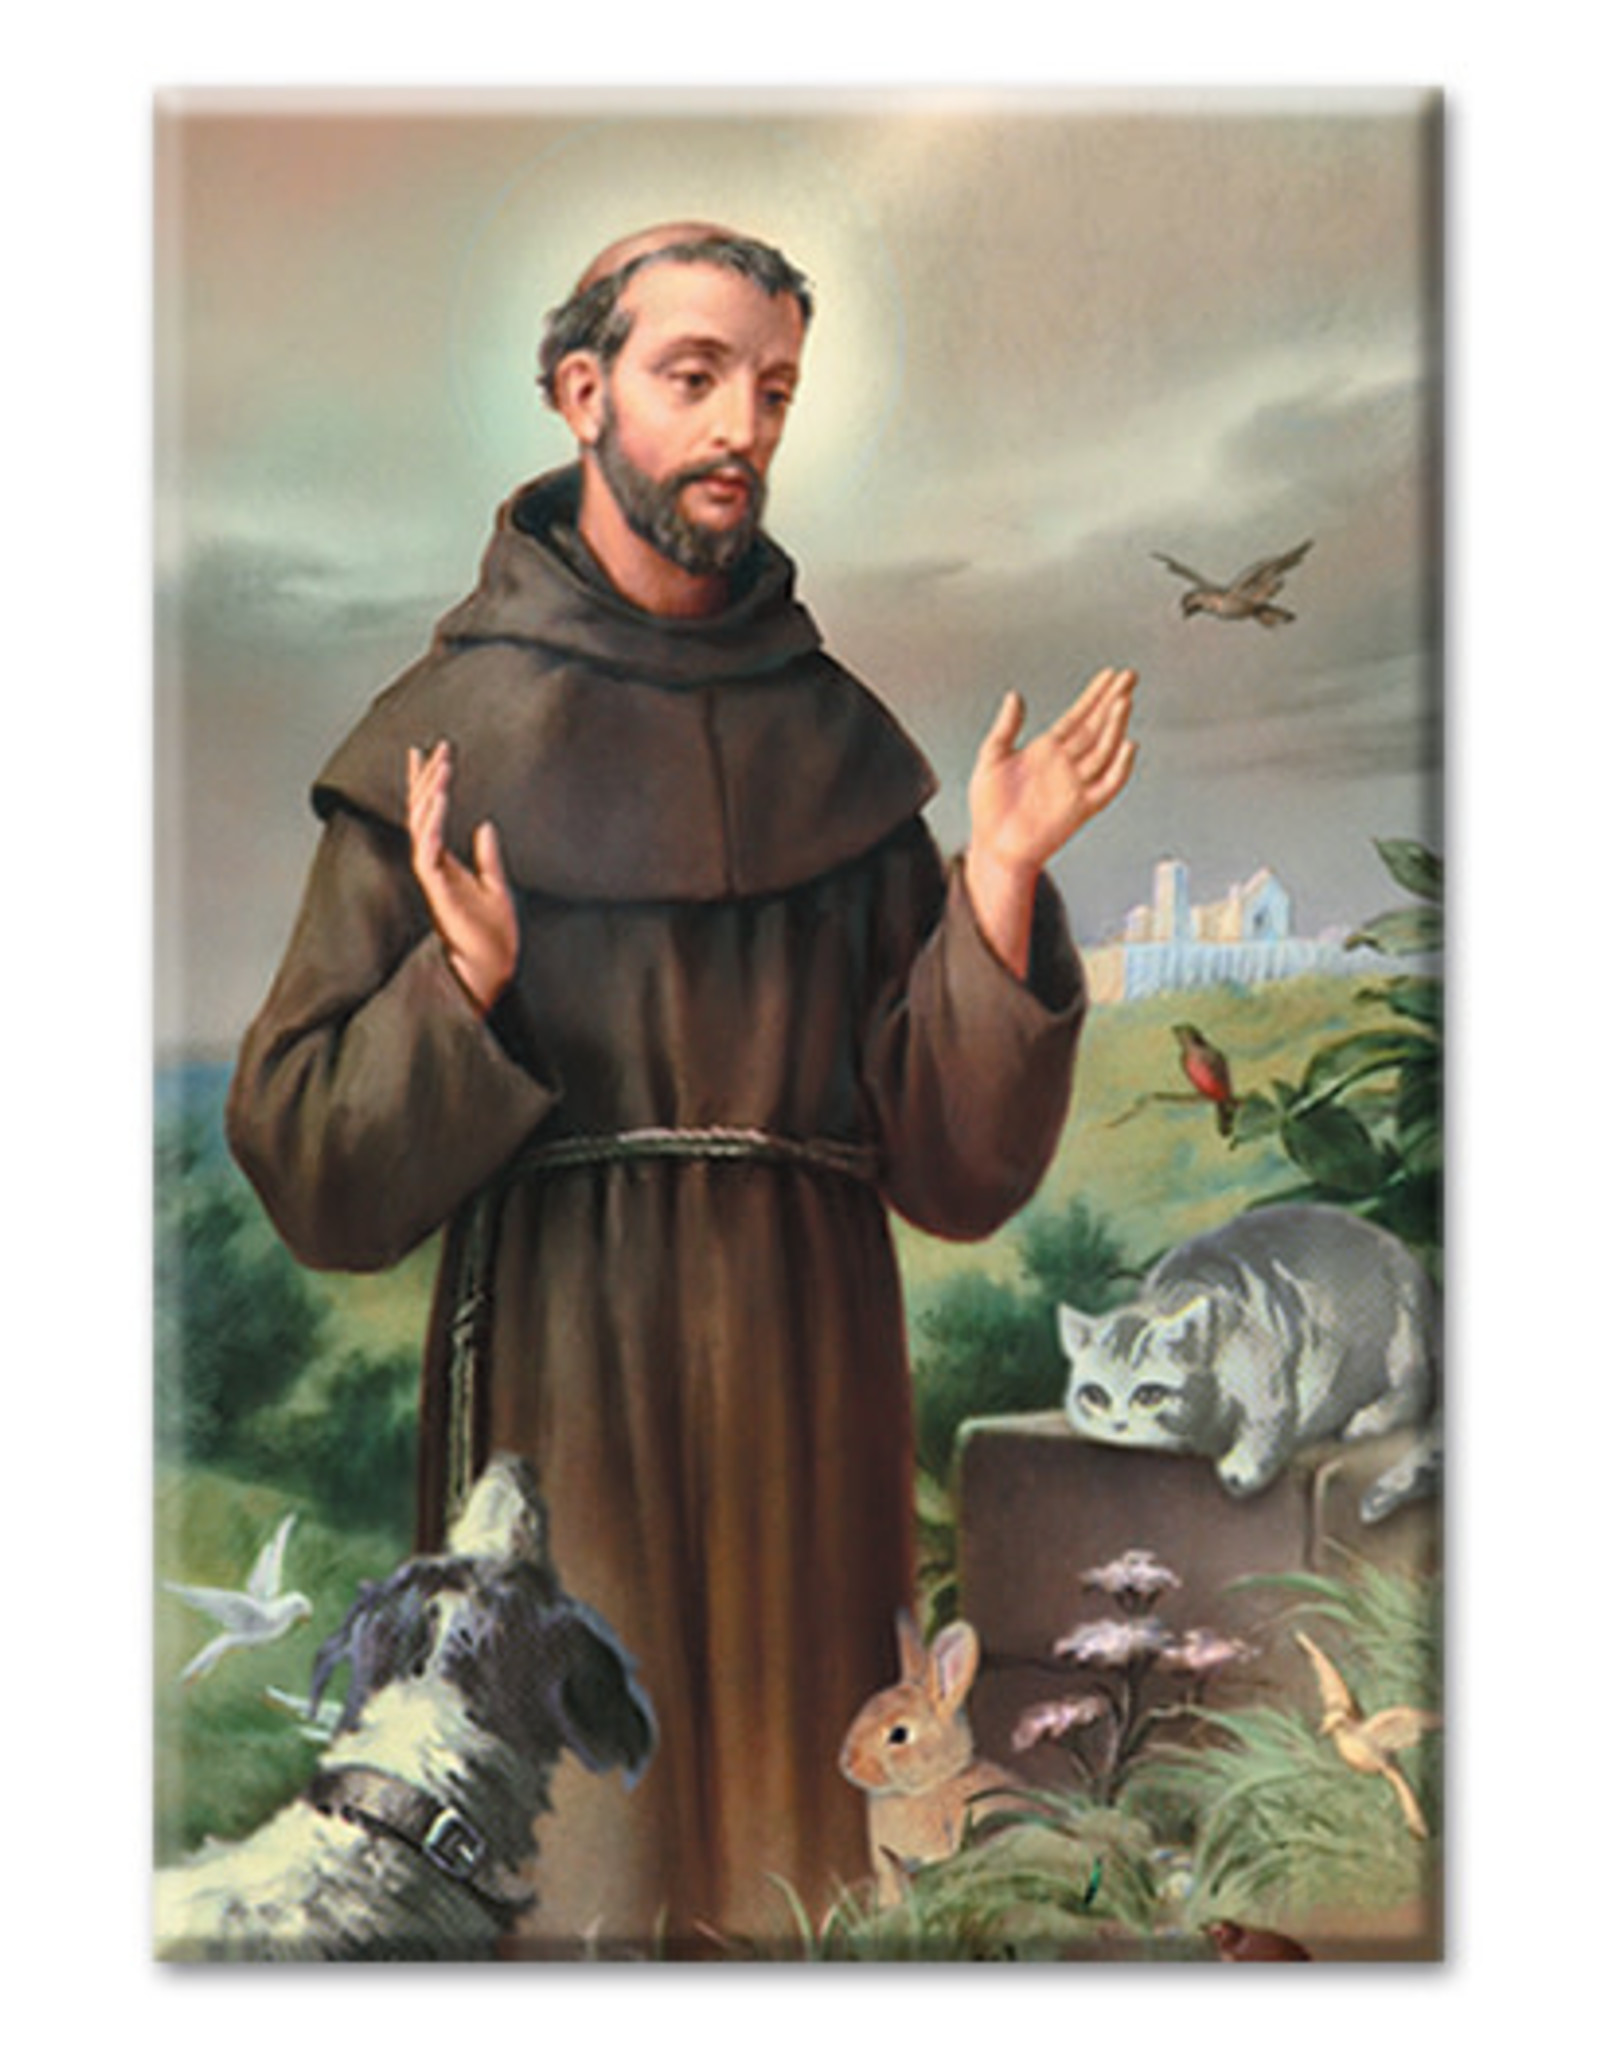 Hirten St. Francis of Assisi Magnet, 2” x 3”